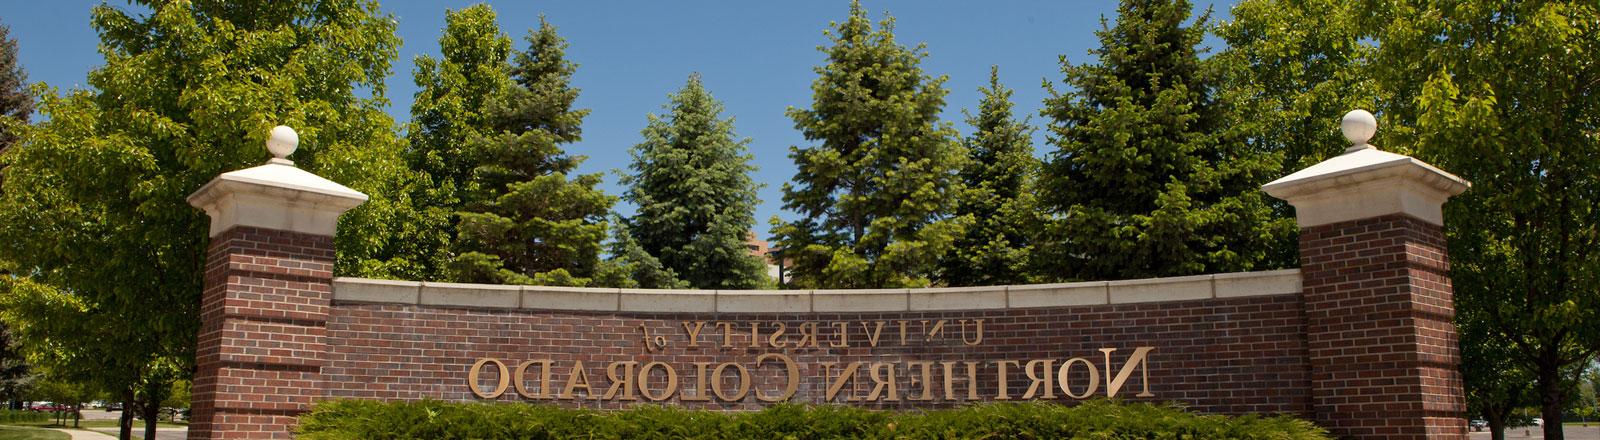 University of Northern Colorado Sign